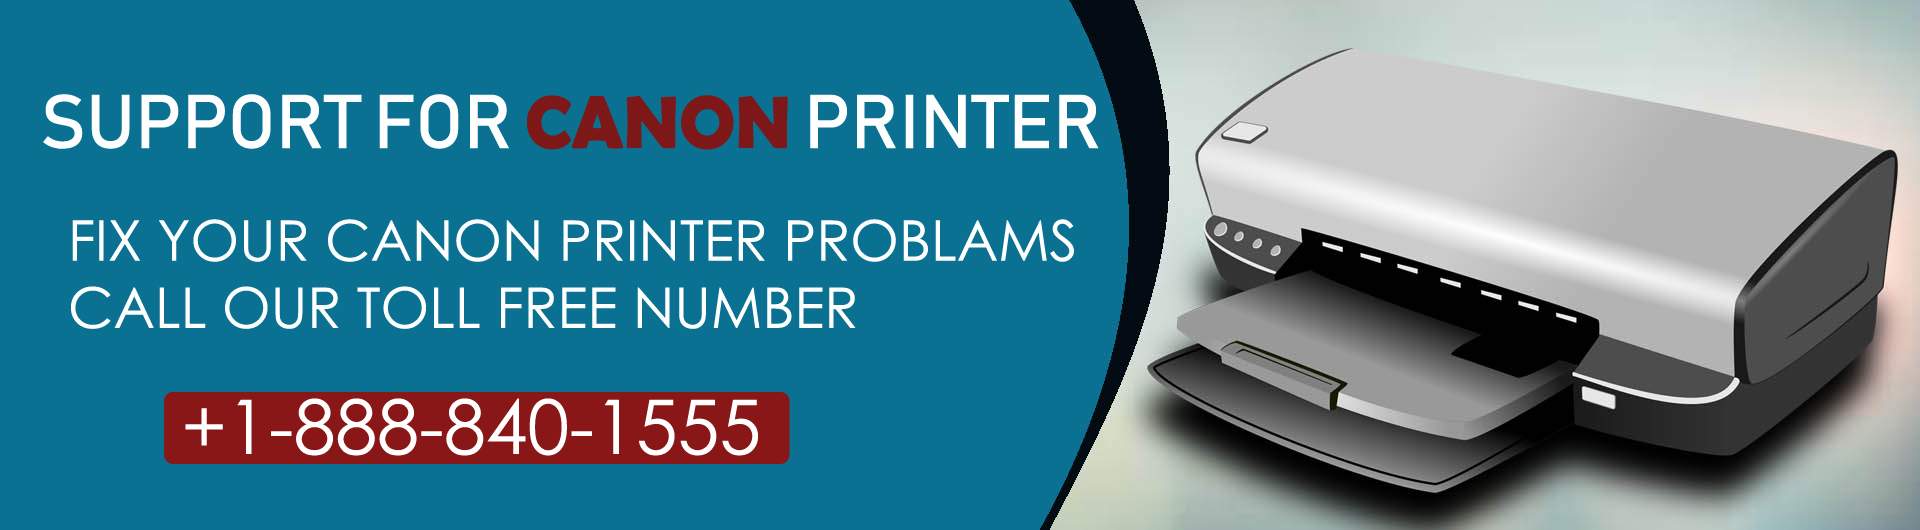 Canon Pixma Printer Support +1-888-840-1555 Assistant Services